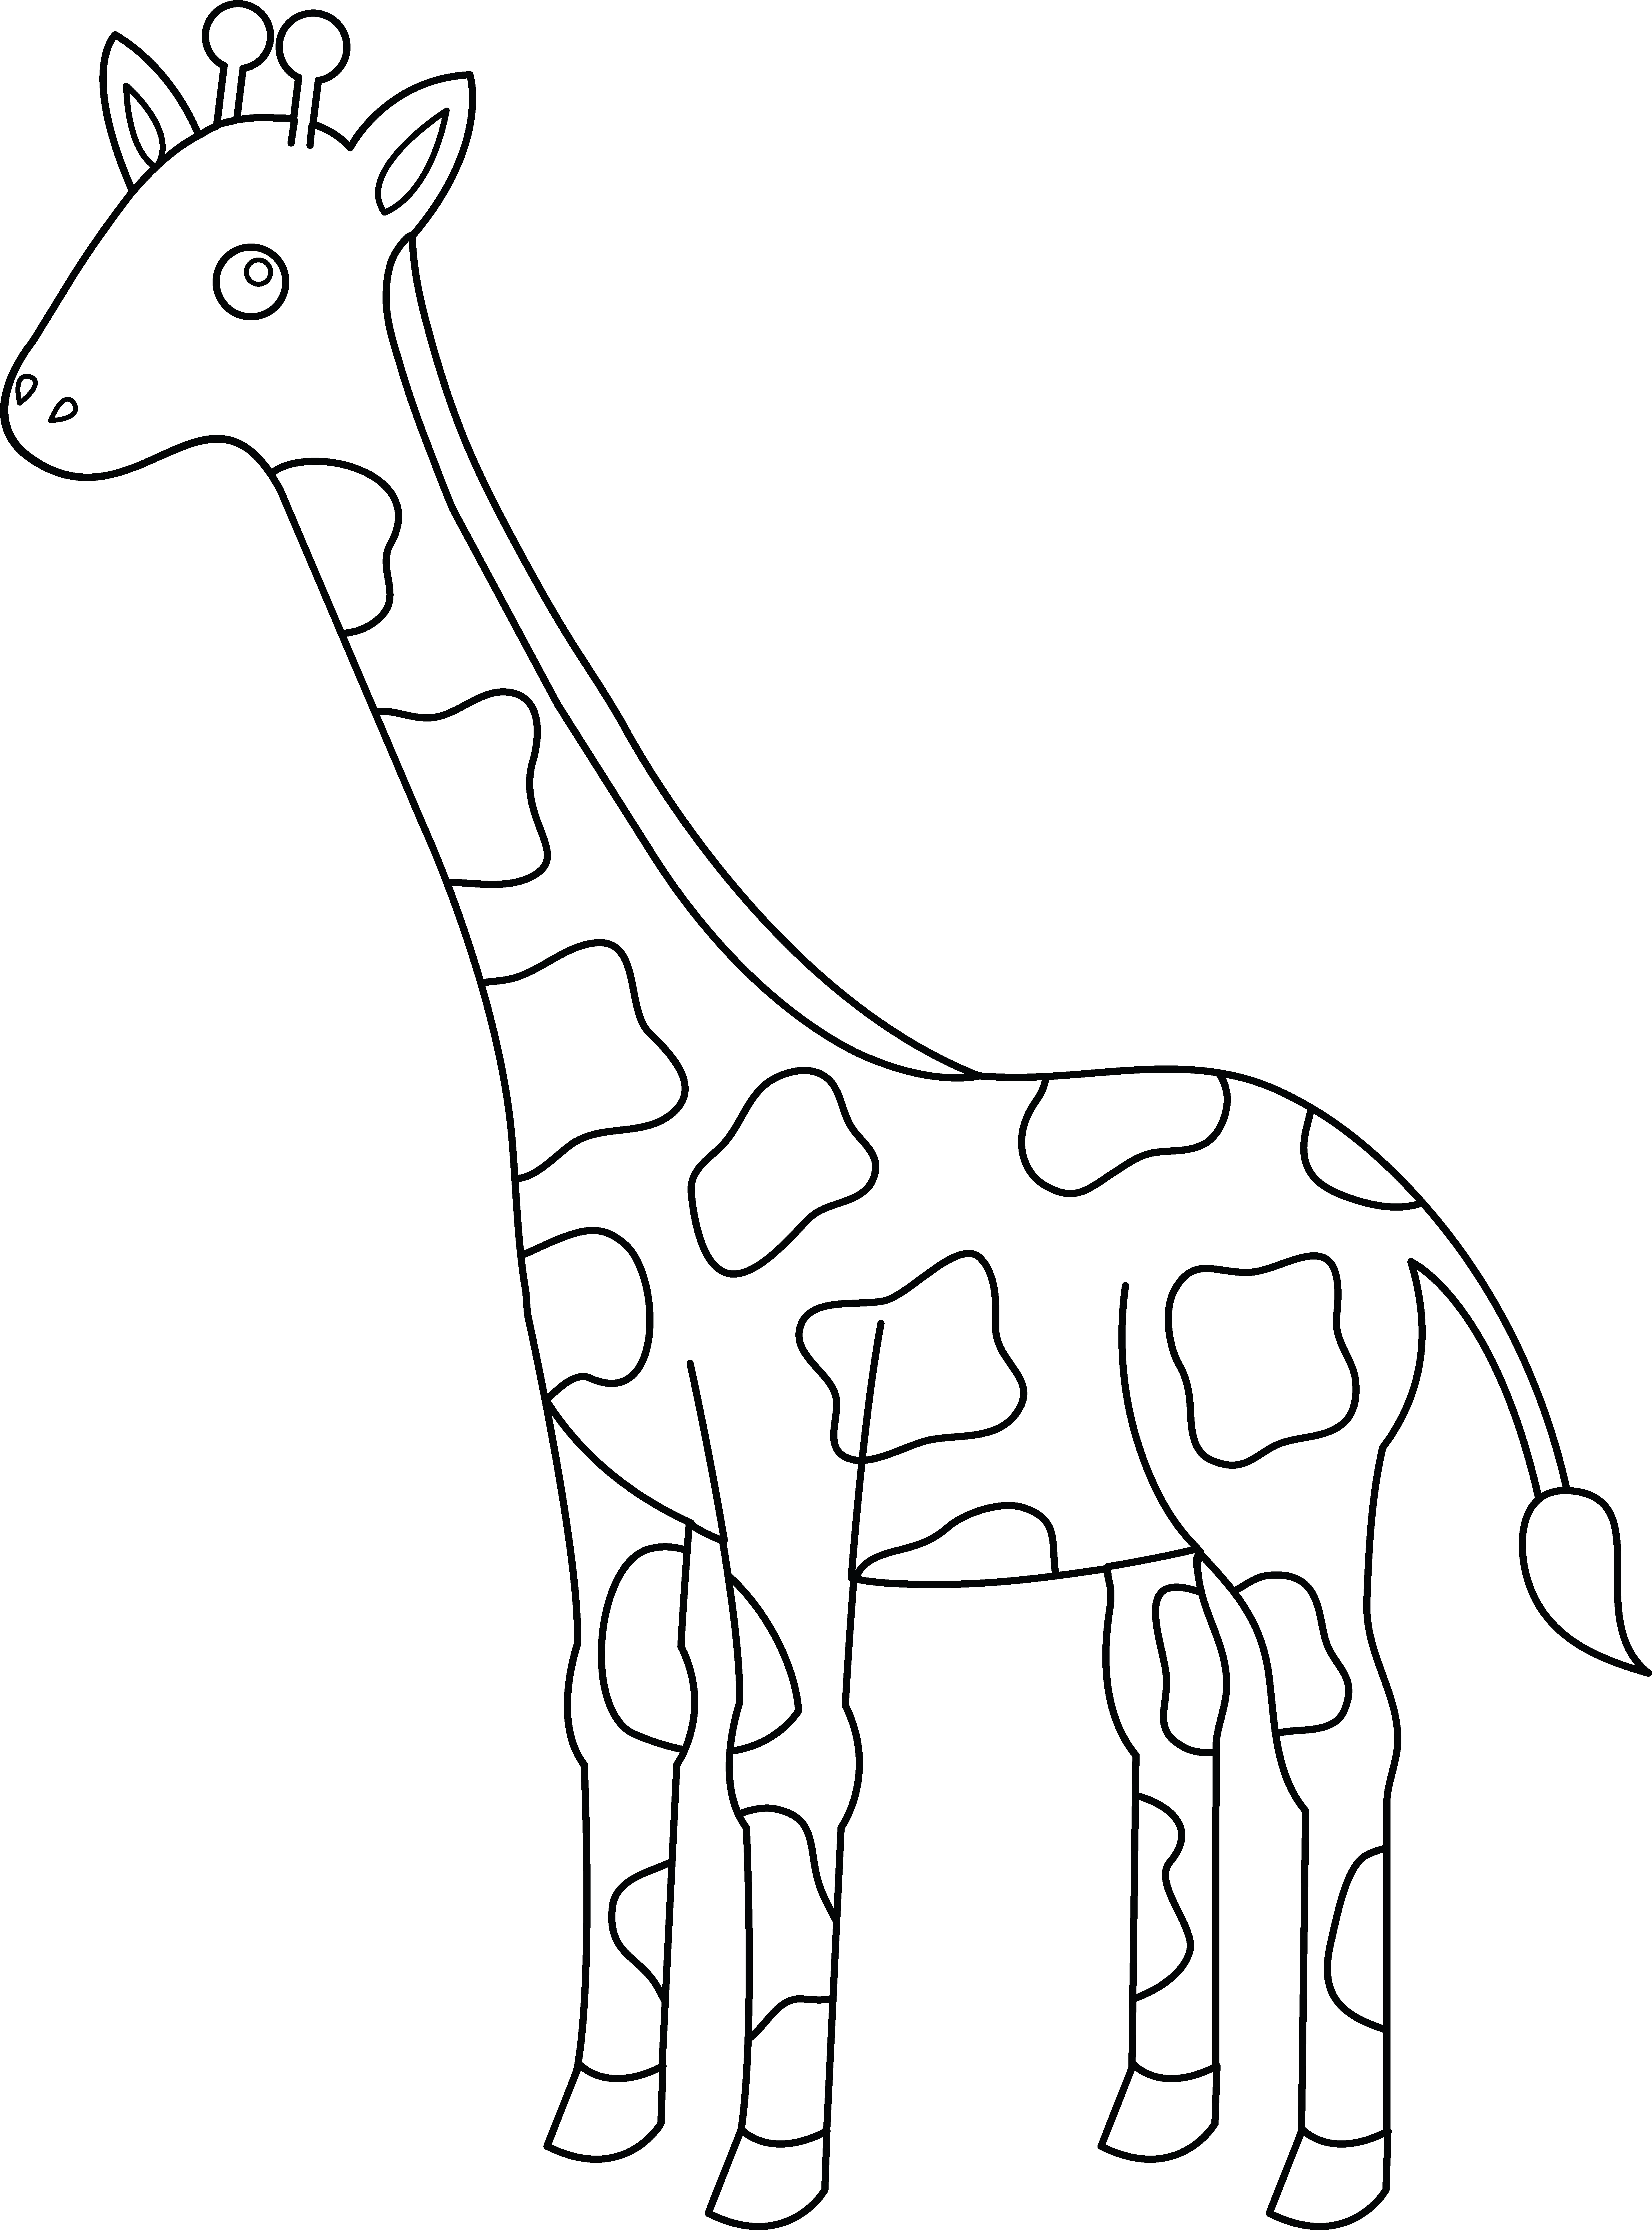 Animal Head Outline Giraff Cliparts.co